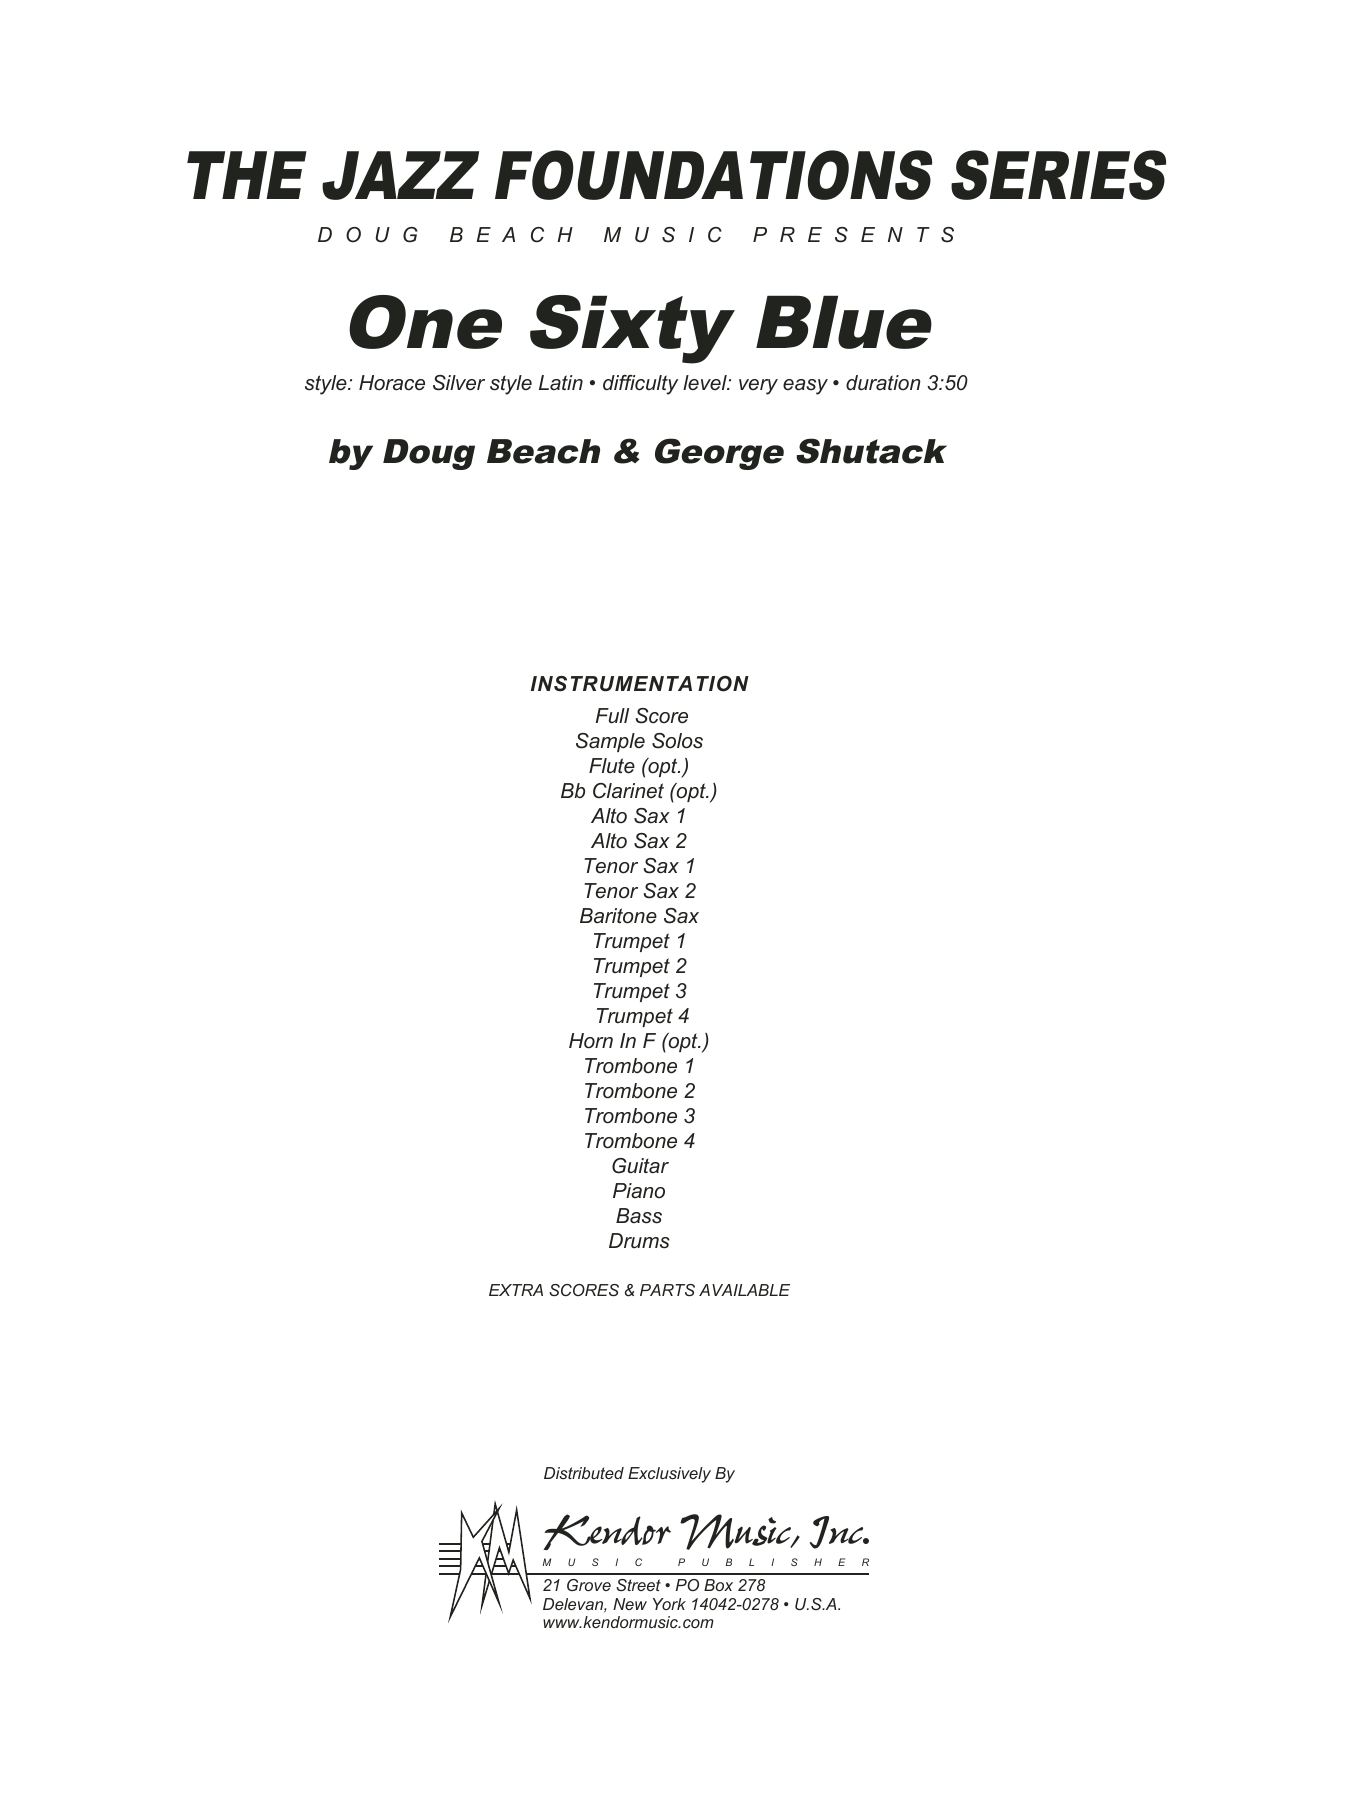 Download Doug Beach One Sixty Blue - Full Score Sheet Music